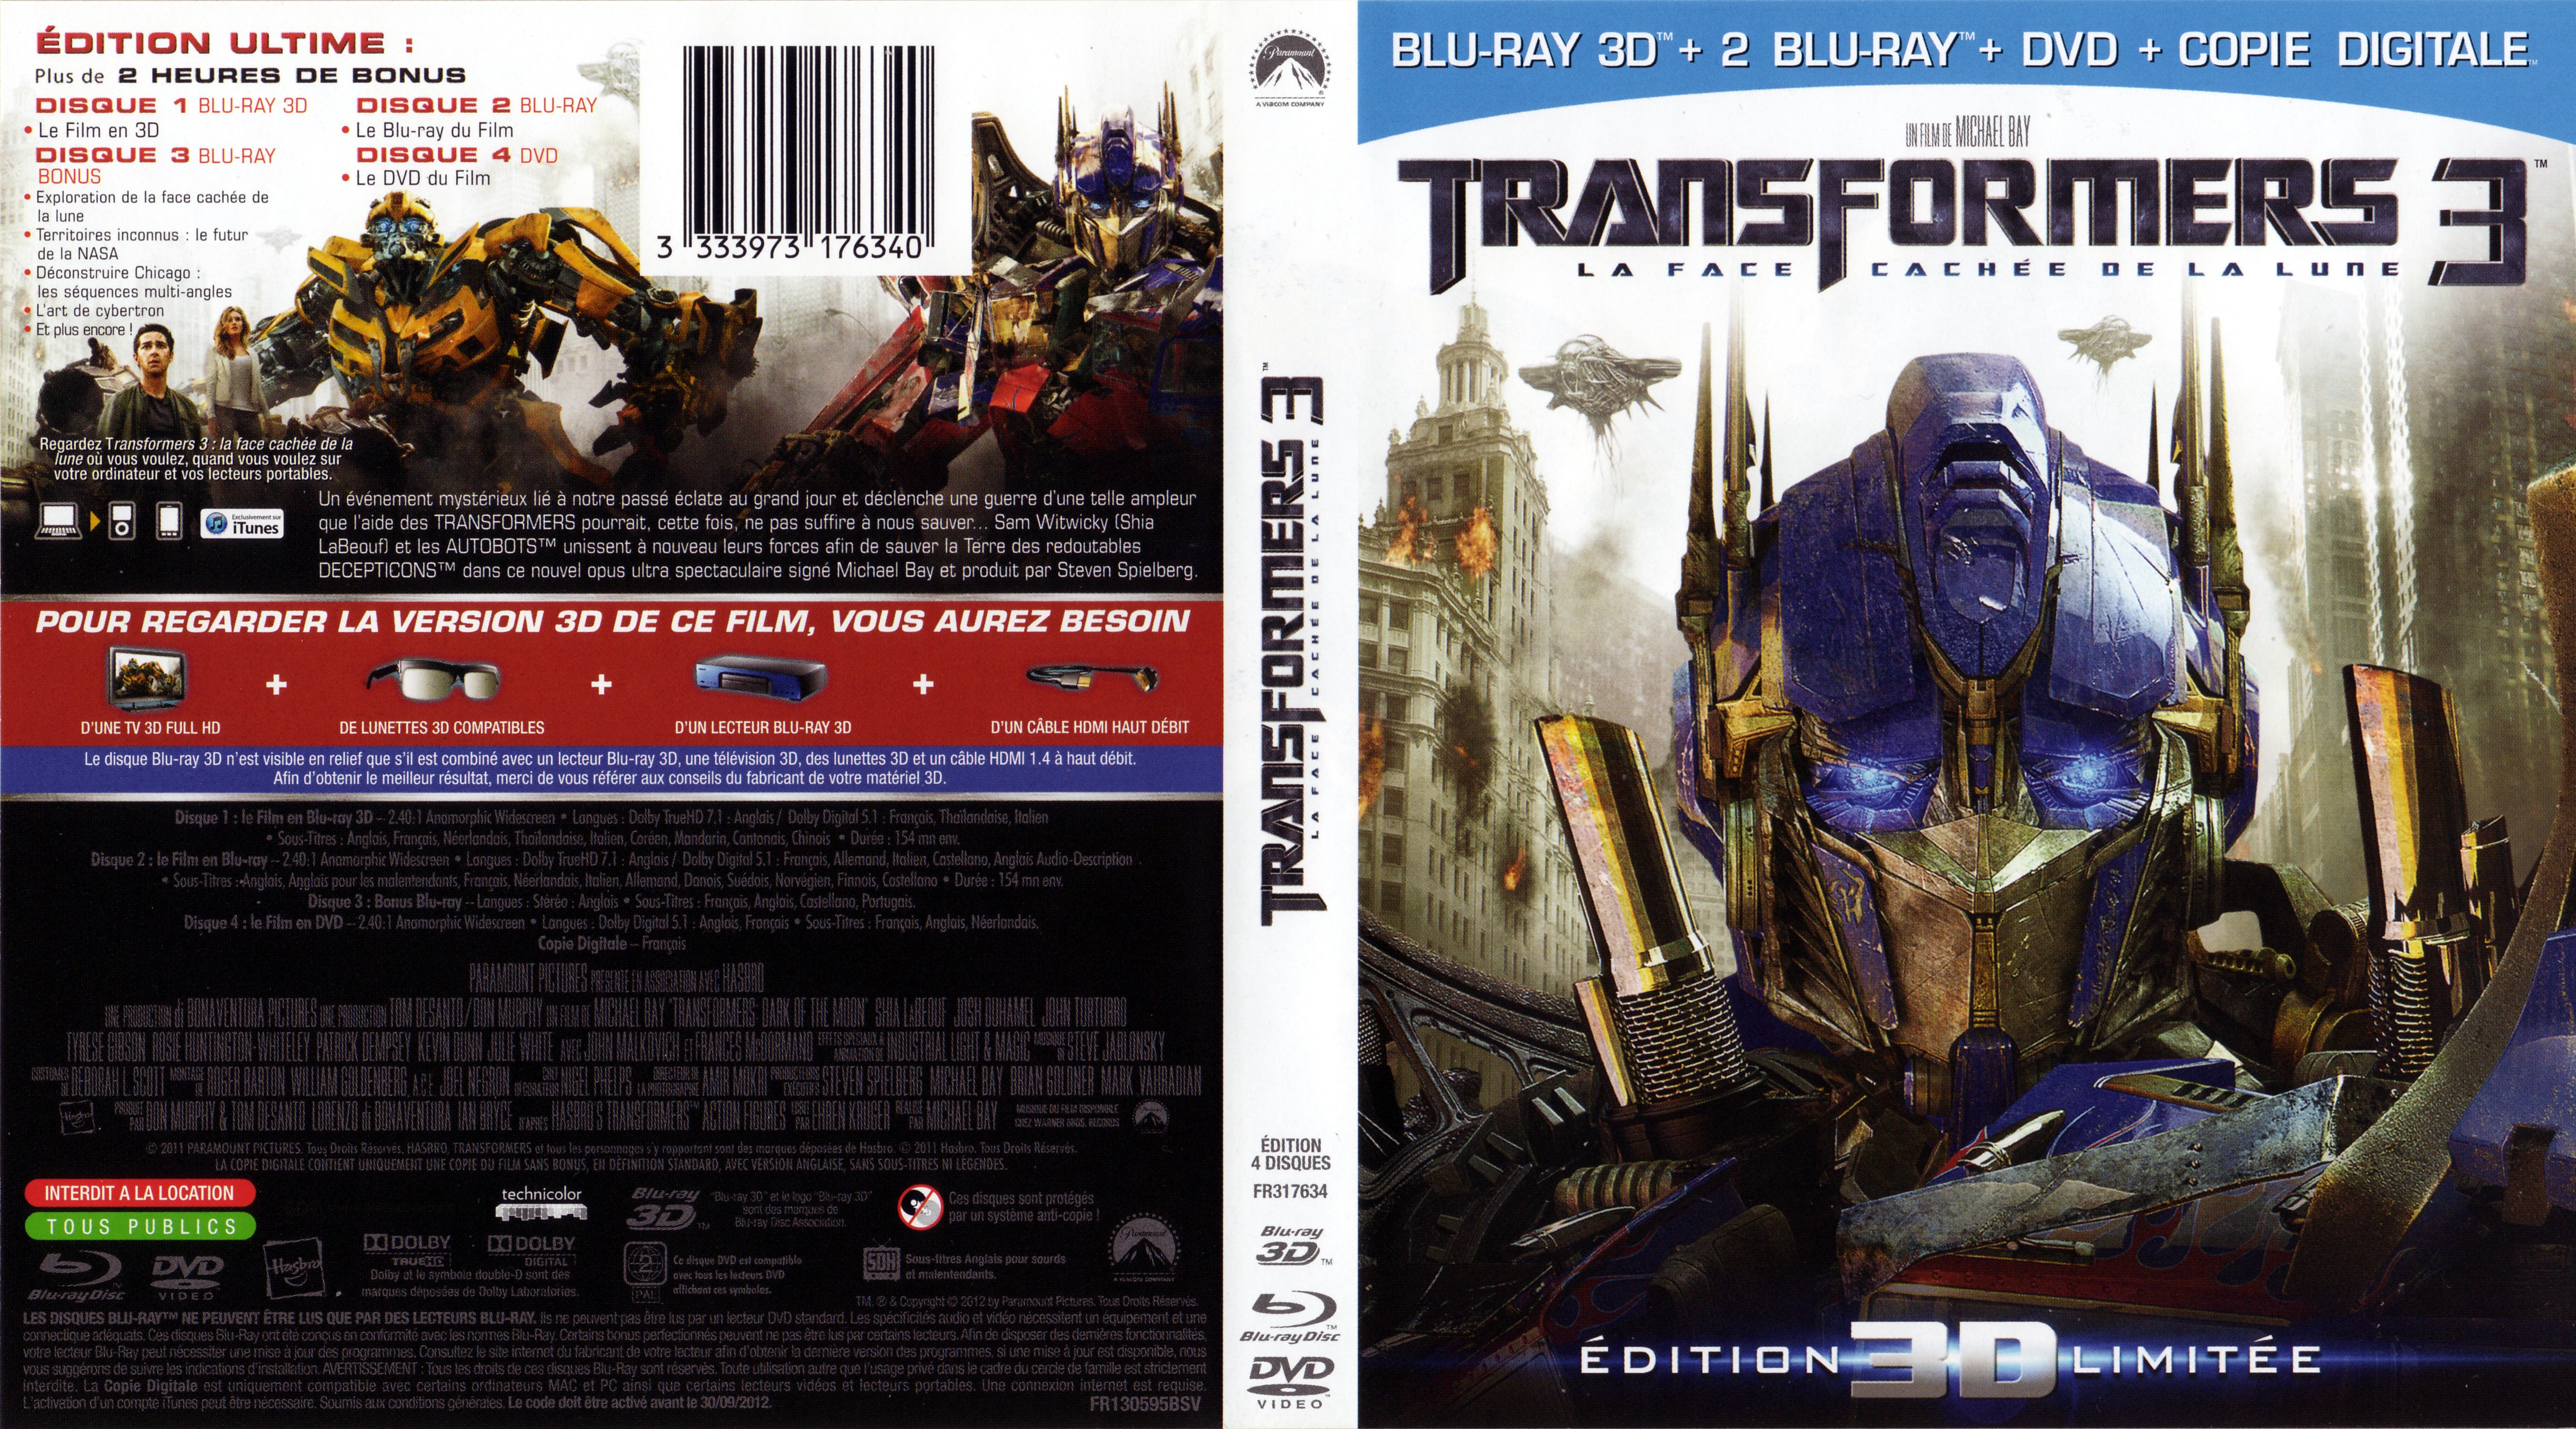 Jaquette DVD Transformers 3 (BLU-RAY) v3